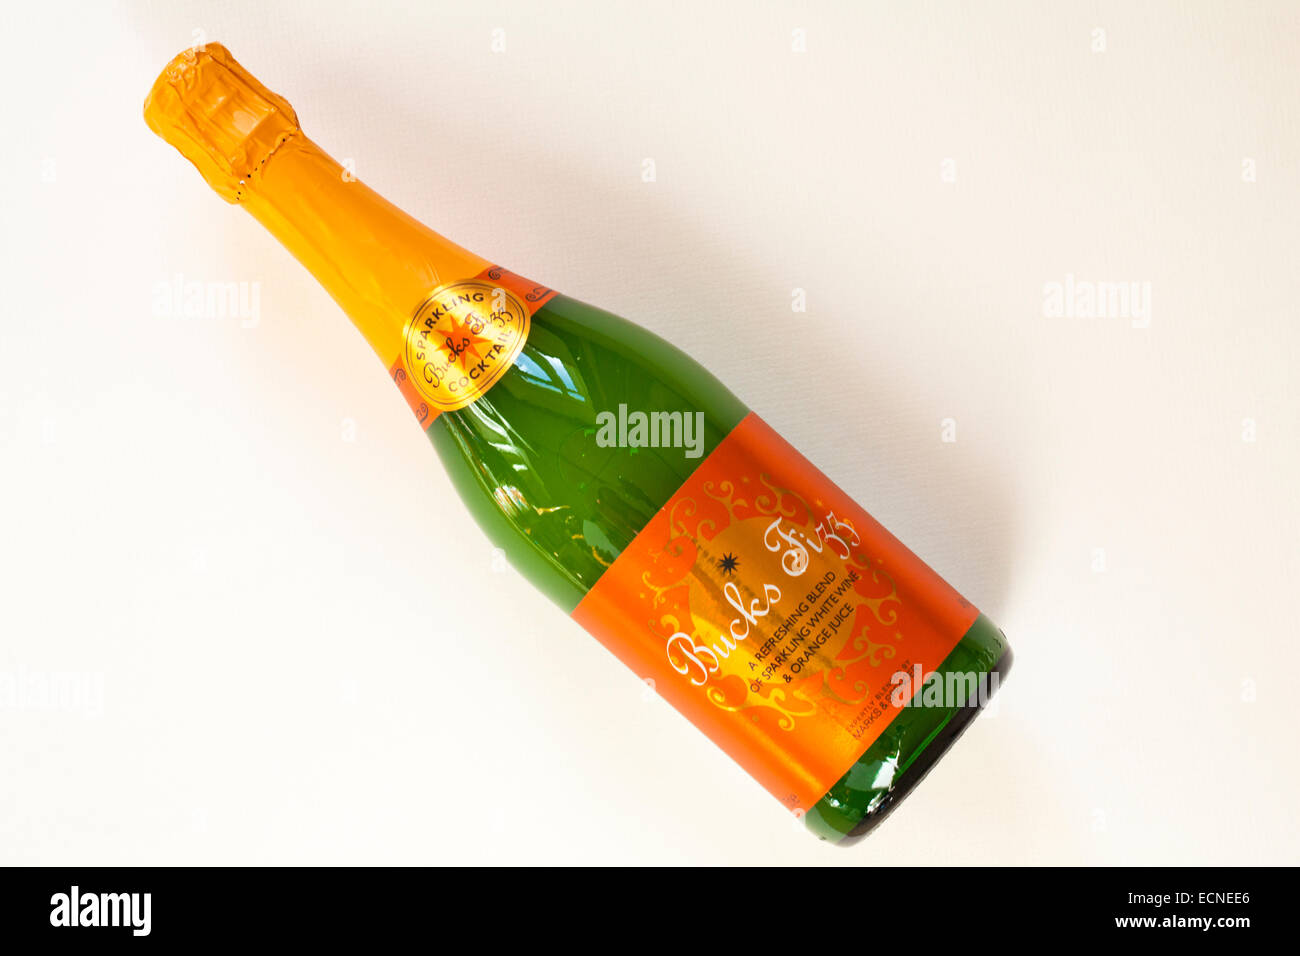 bottle of Sparkling Bucks Fizz Cocktail a refreshing blend of sparkling white wine & orange juice expertly blended by Marks & Spencer Stock Photo